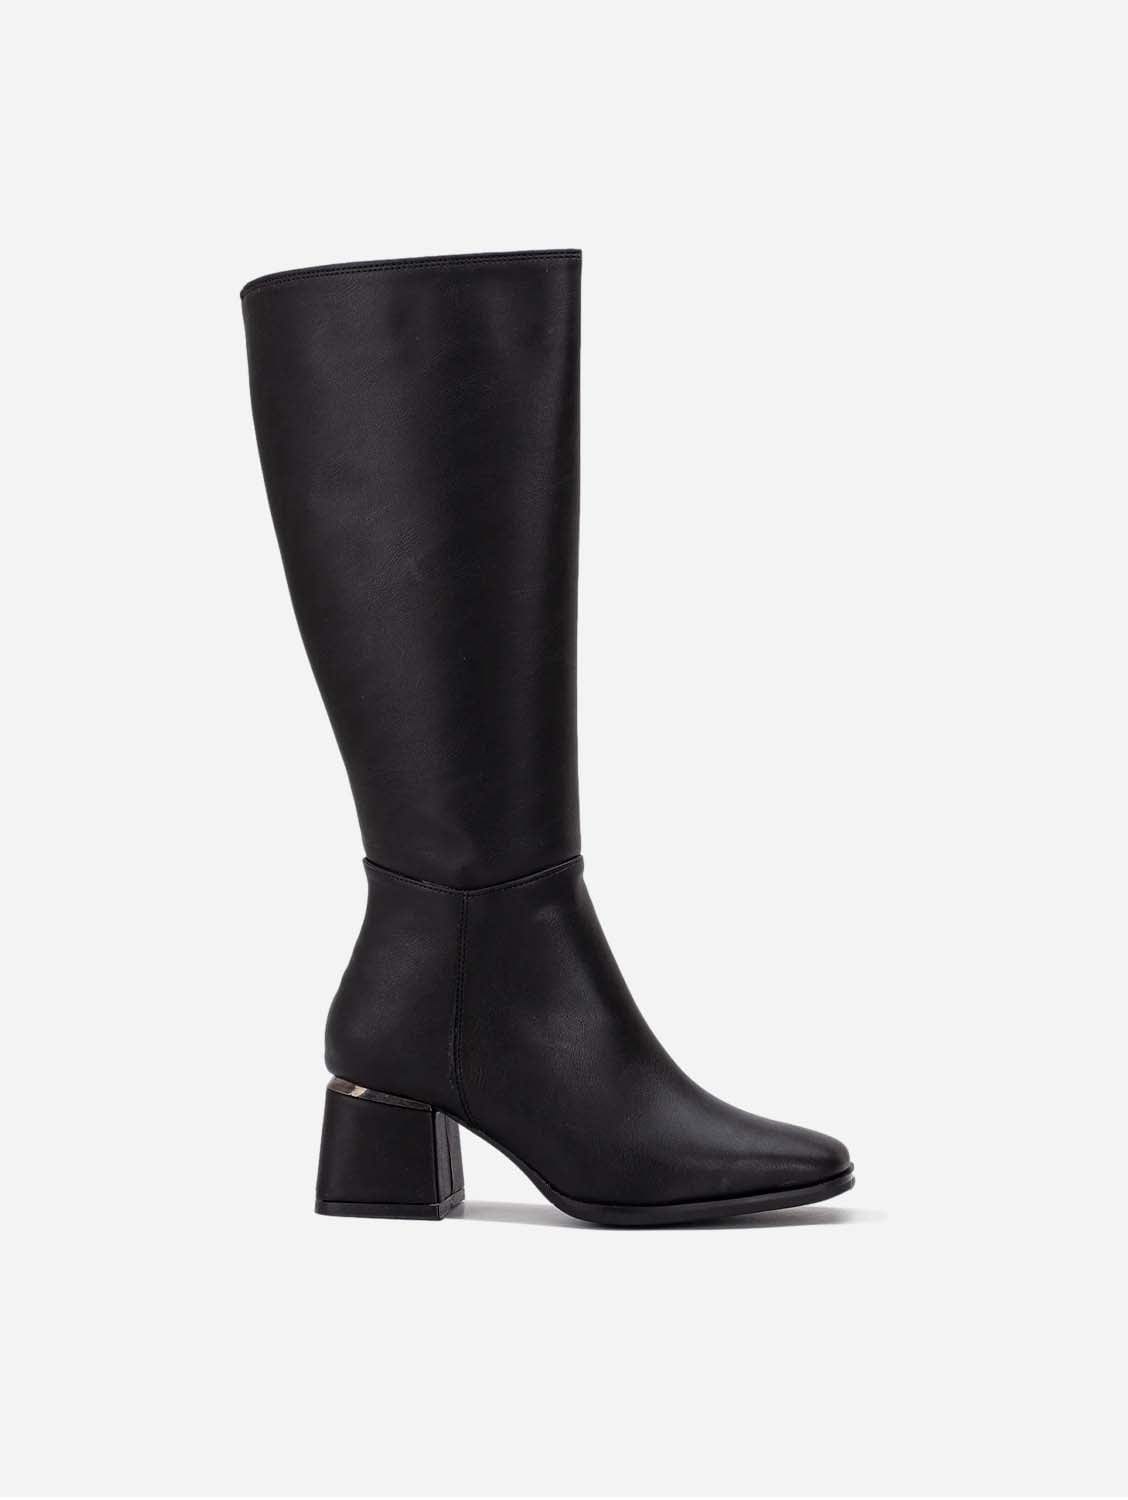 Prologue Shoes Anelise Vegan Leather Knee High Boots | Black UK3 / EU36 / US5.5 / Black